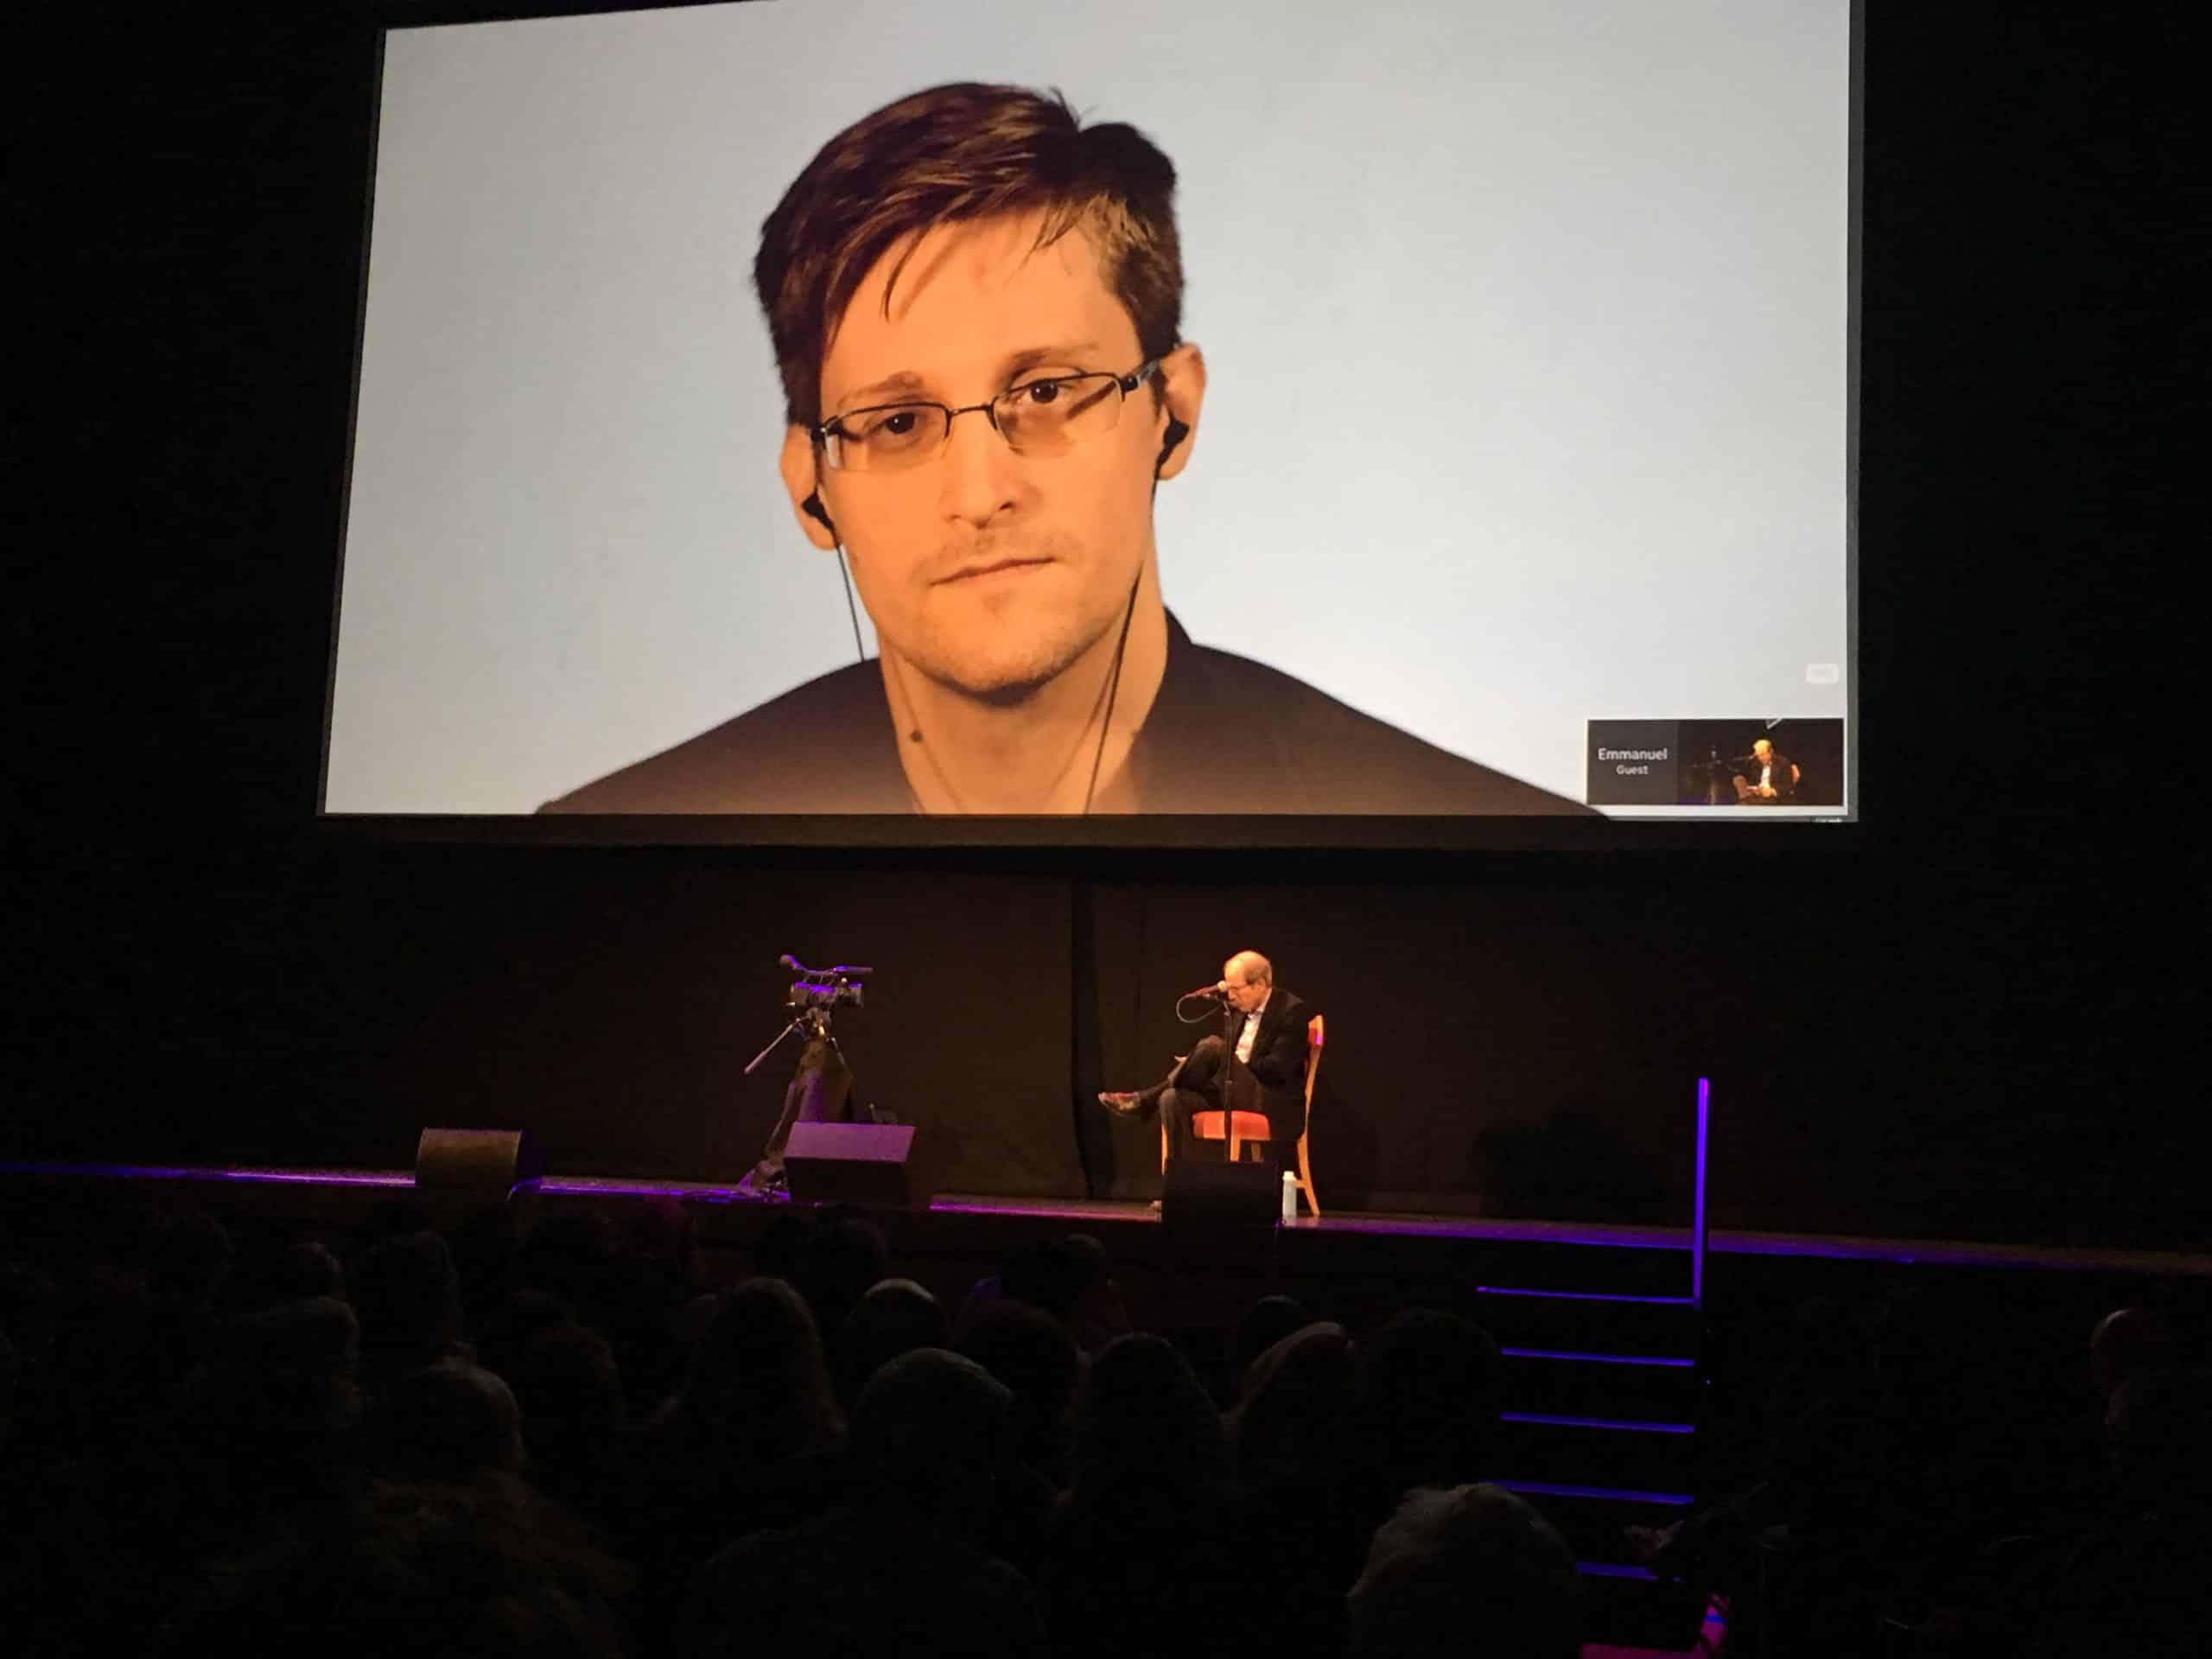 Edward Snowden Live on Video in San Francisco - Paubox